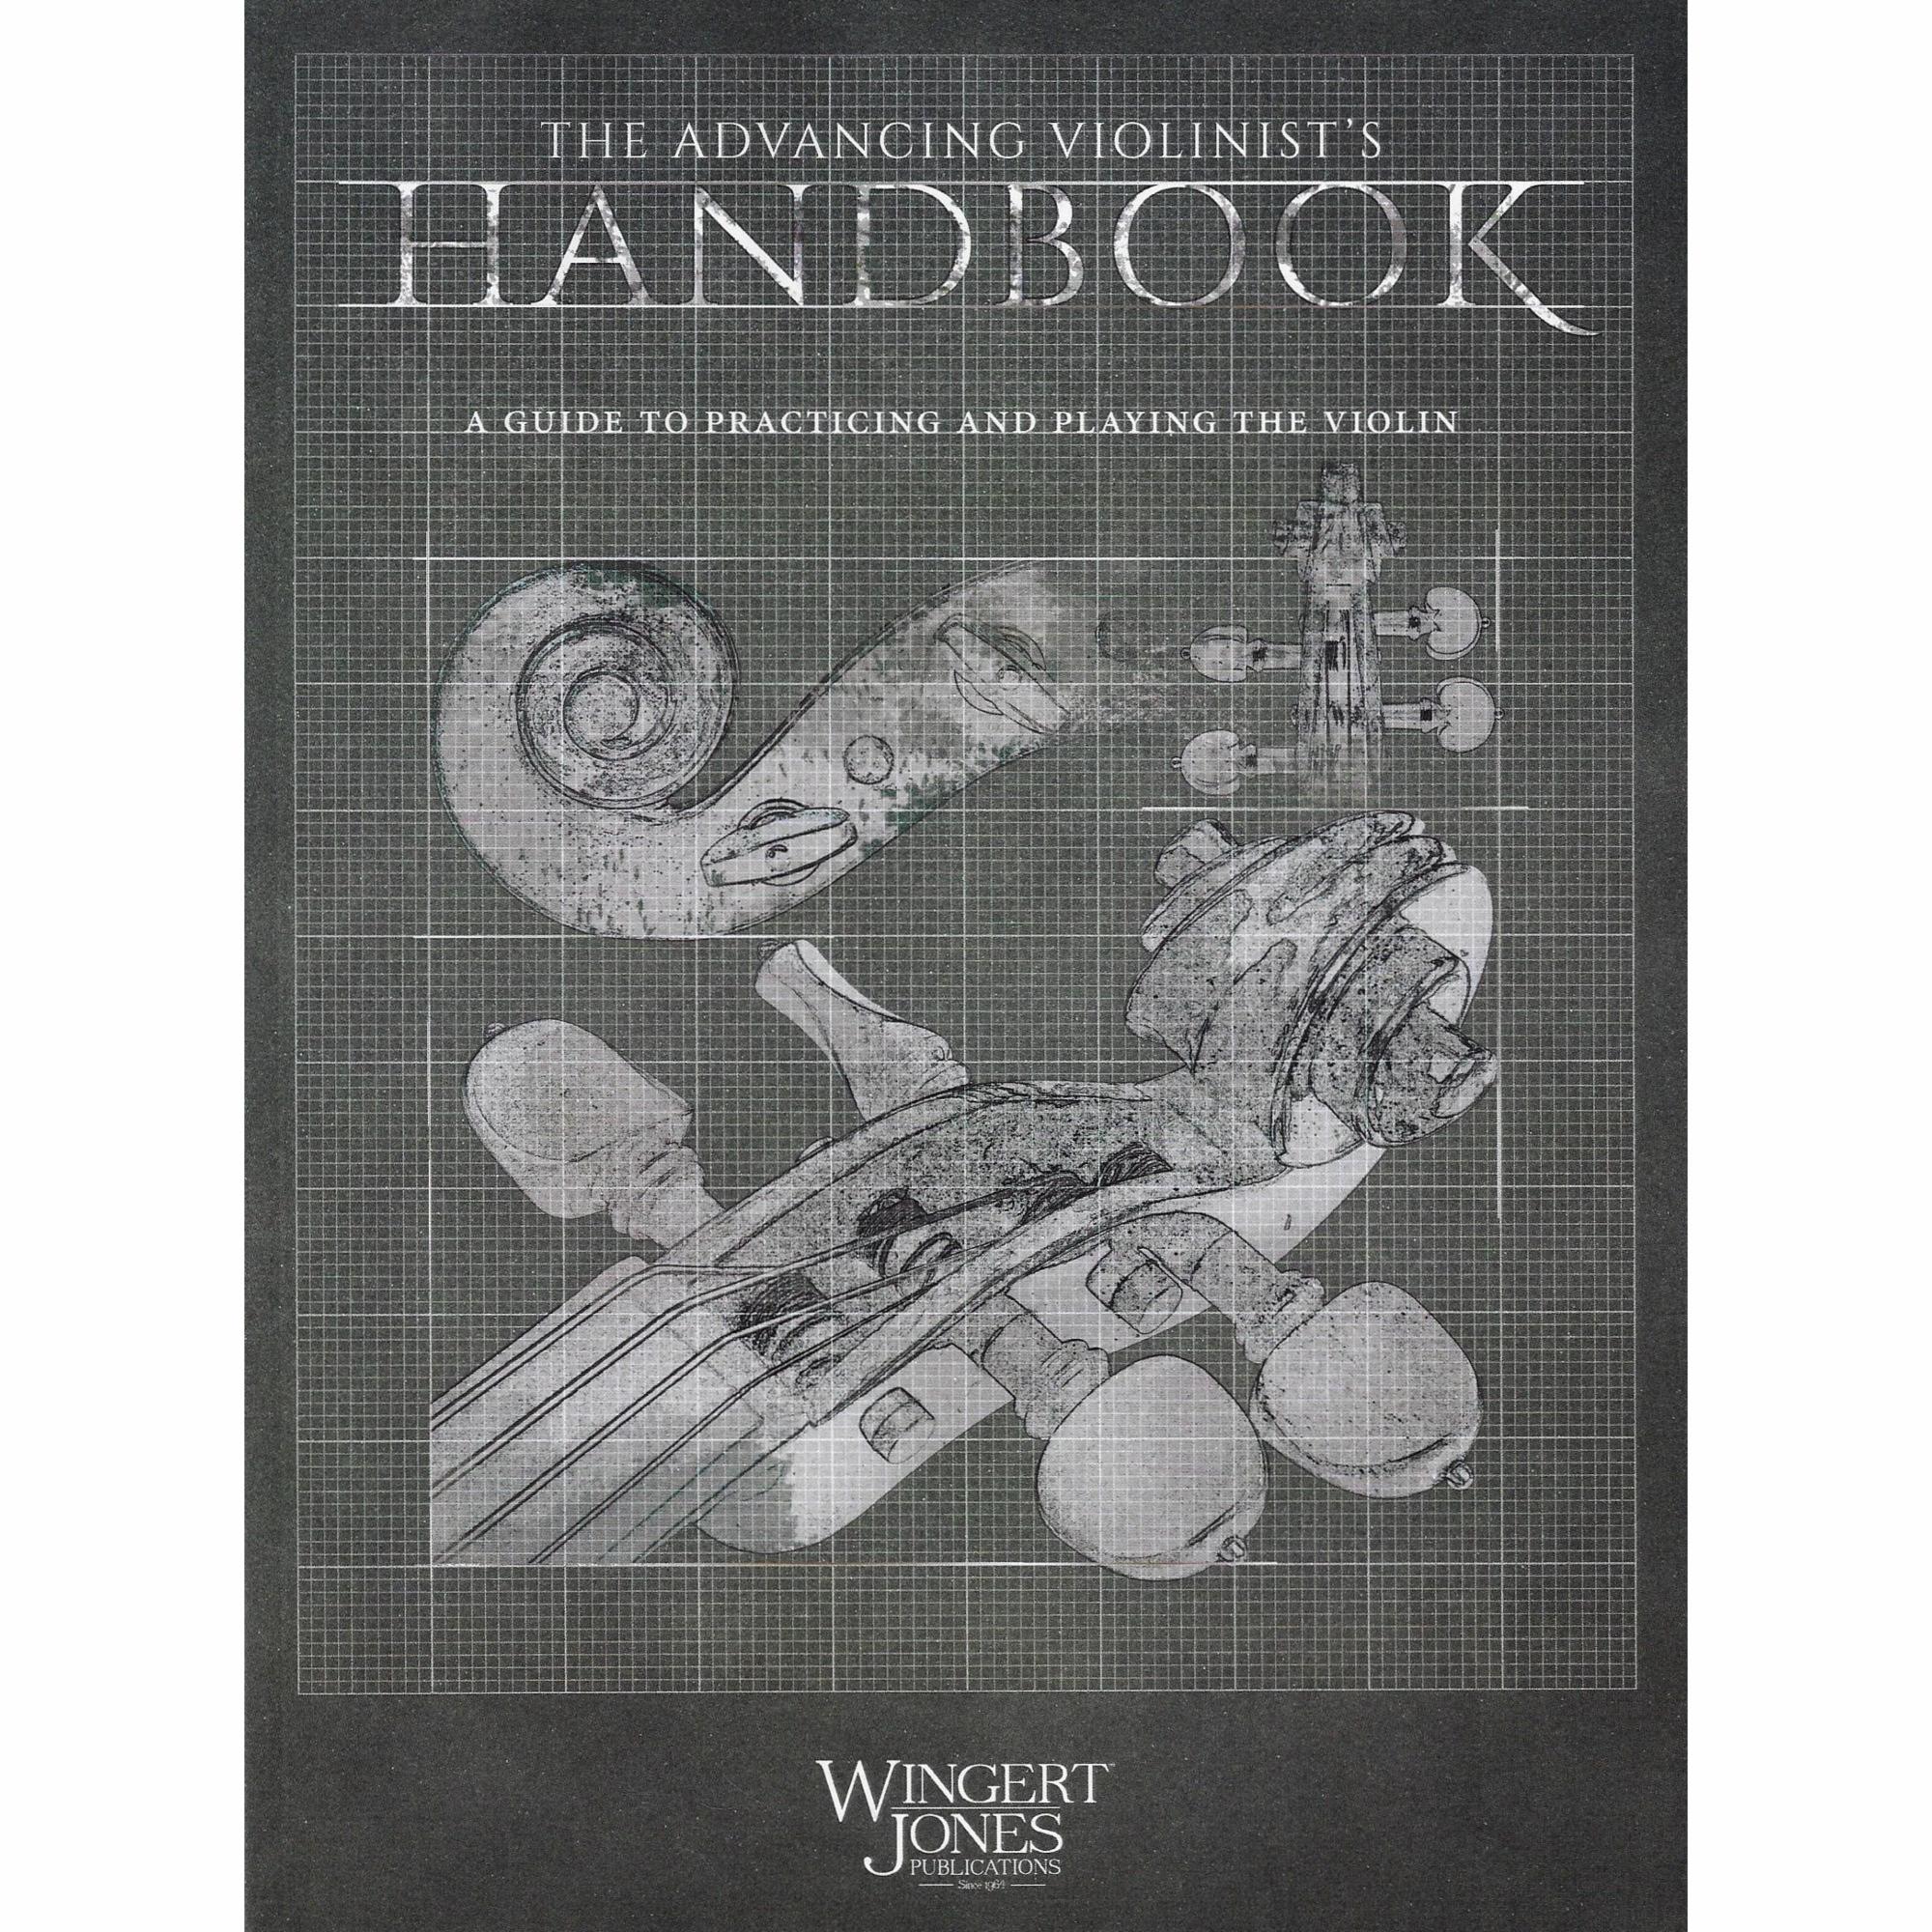 The Advancing Violinist's Handbook